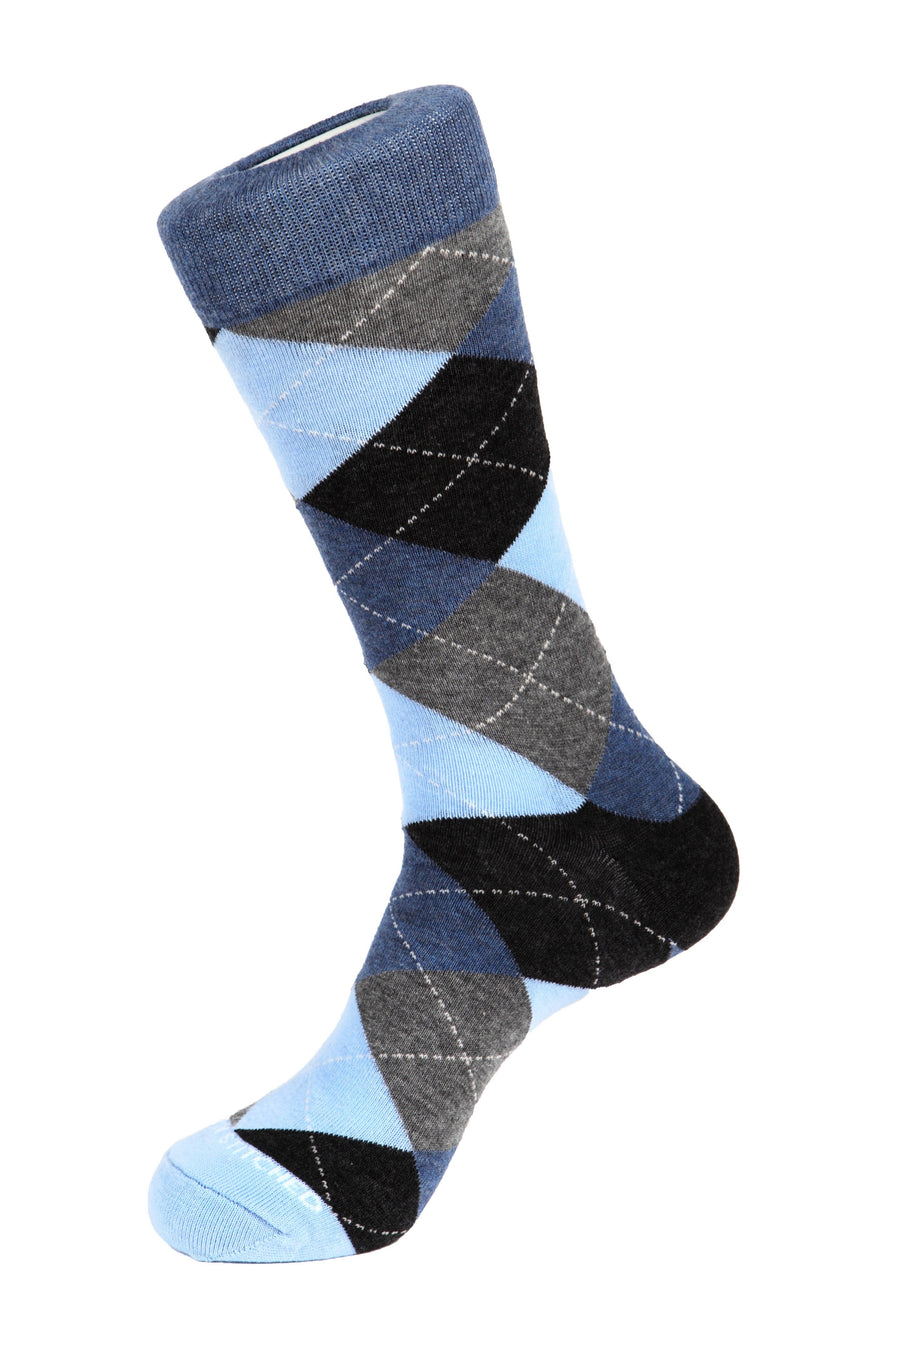 Argyle Dress Socks by Unsimply Stitched